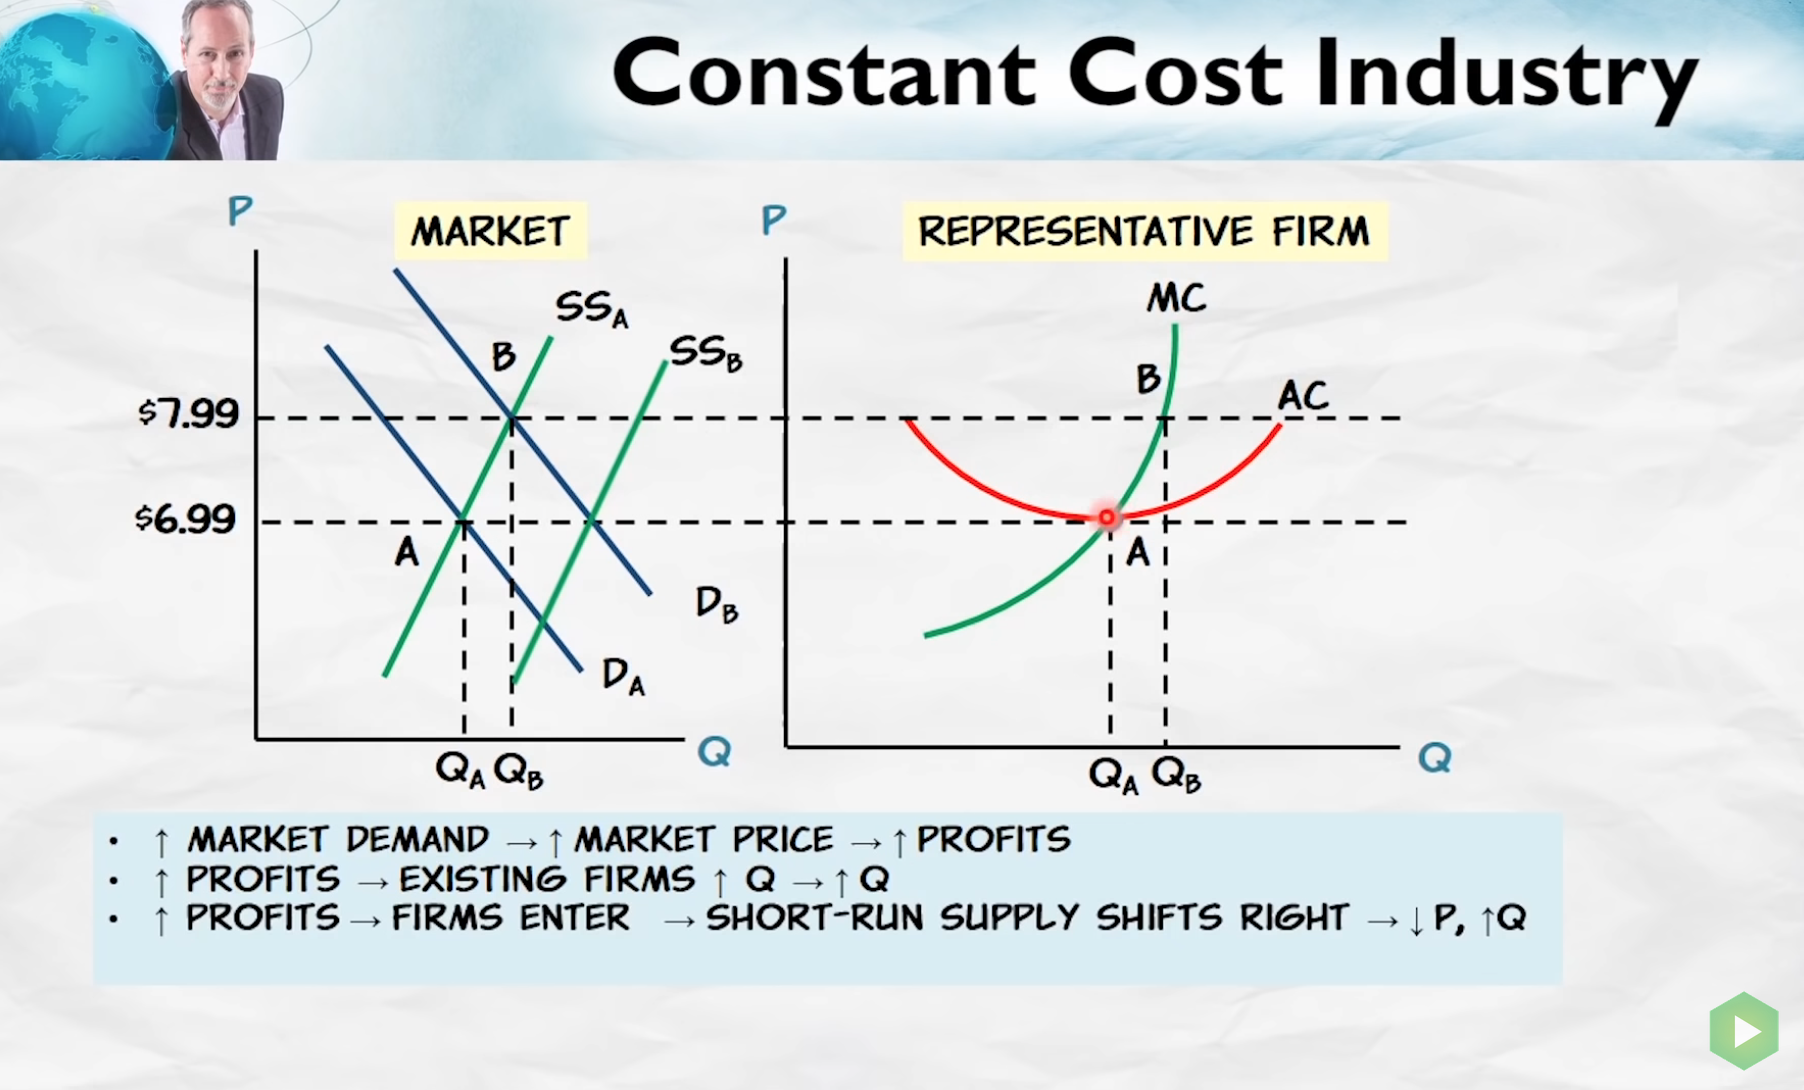 Constant cost industries